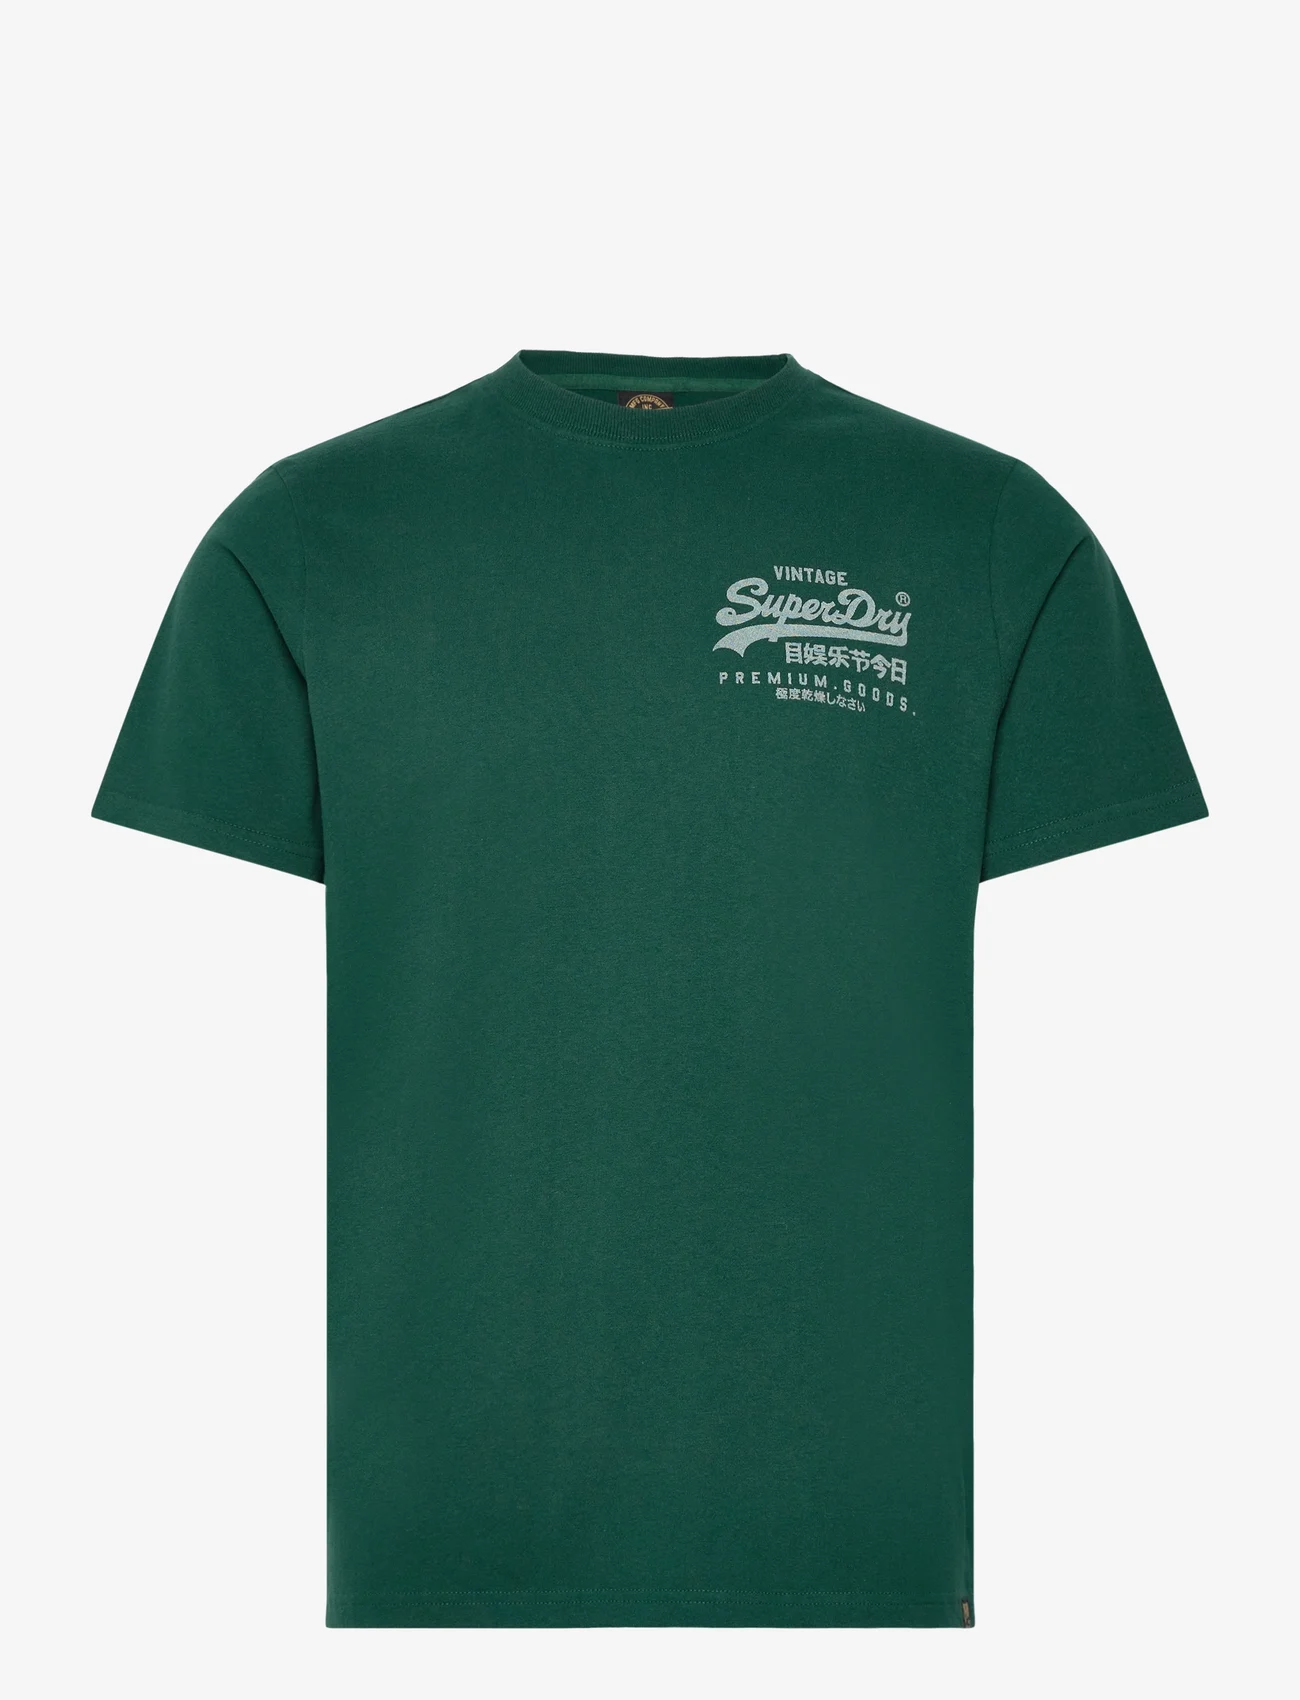 Superdry - CLASSIC VL HERITAGE CHEST TEE - kortärmade t-shirts - bengreen marl - 0